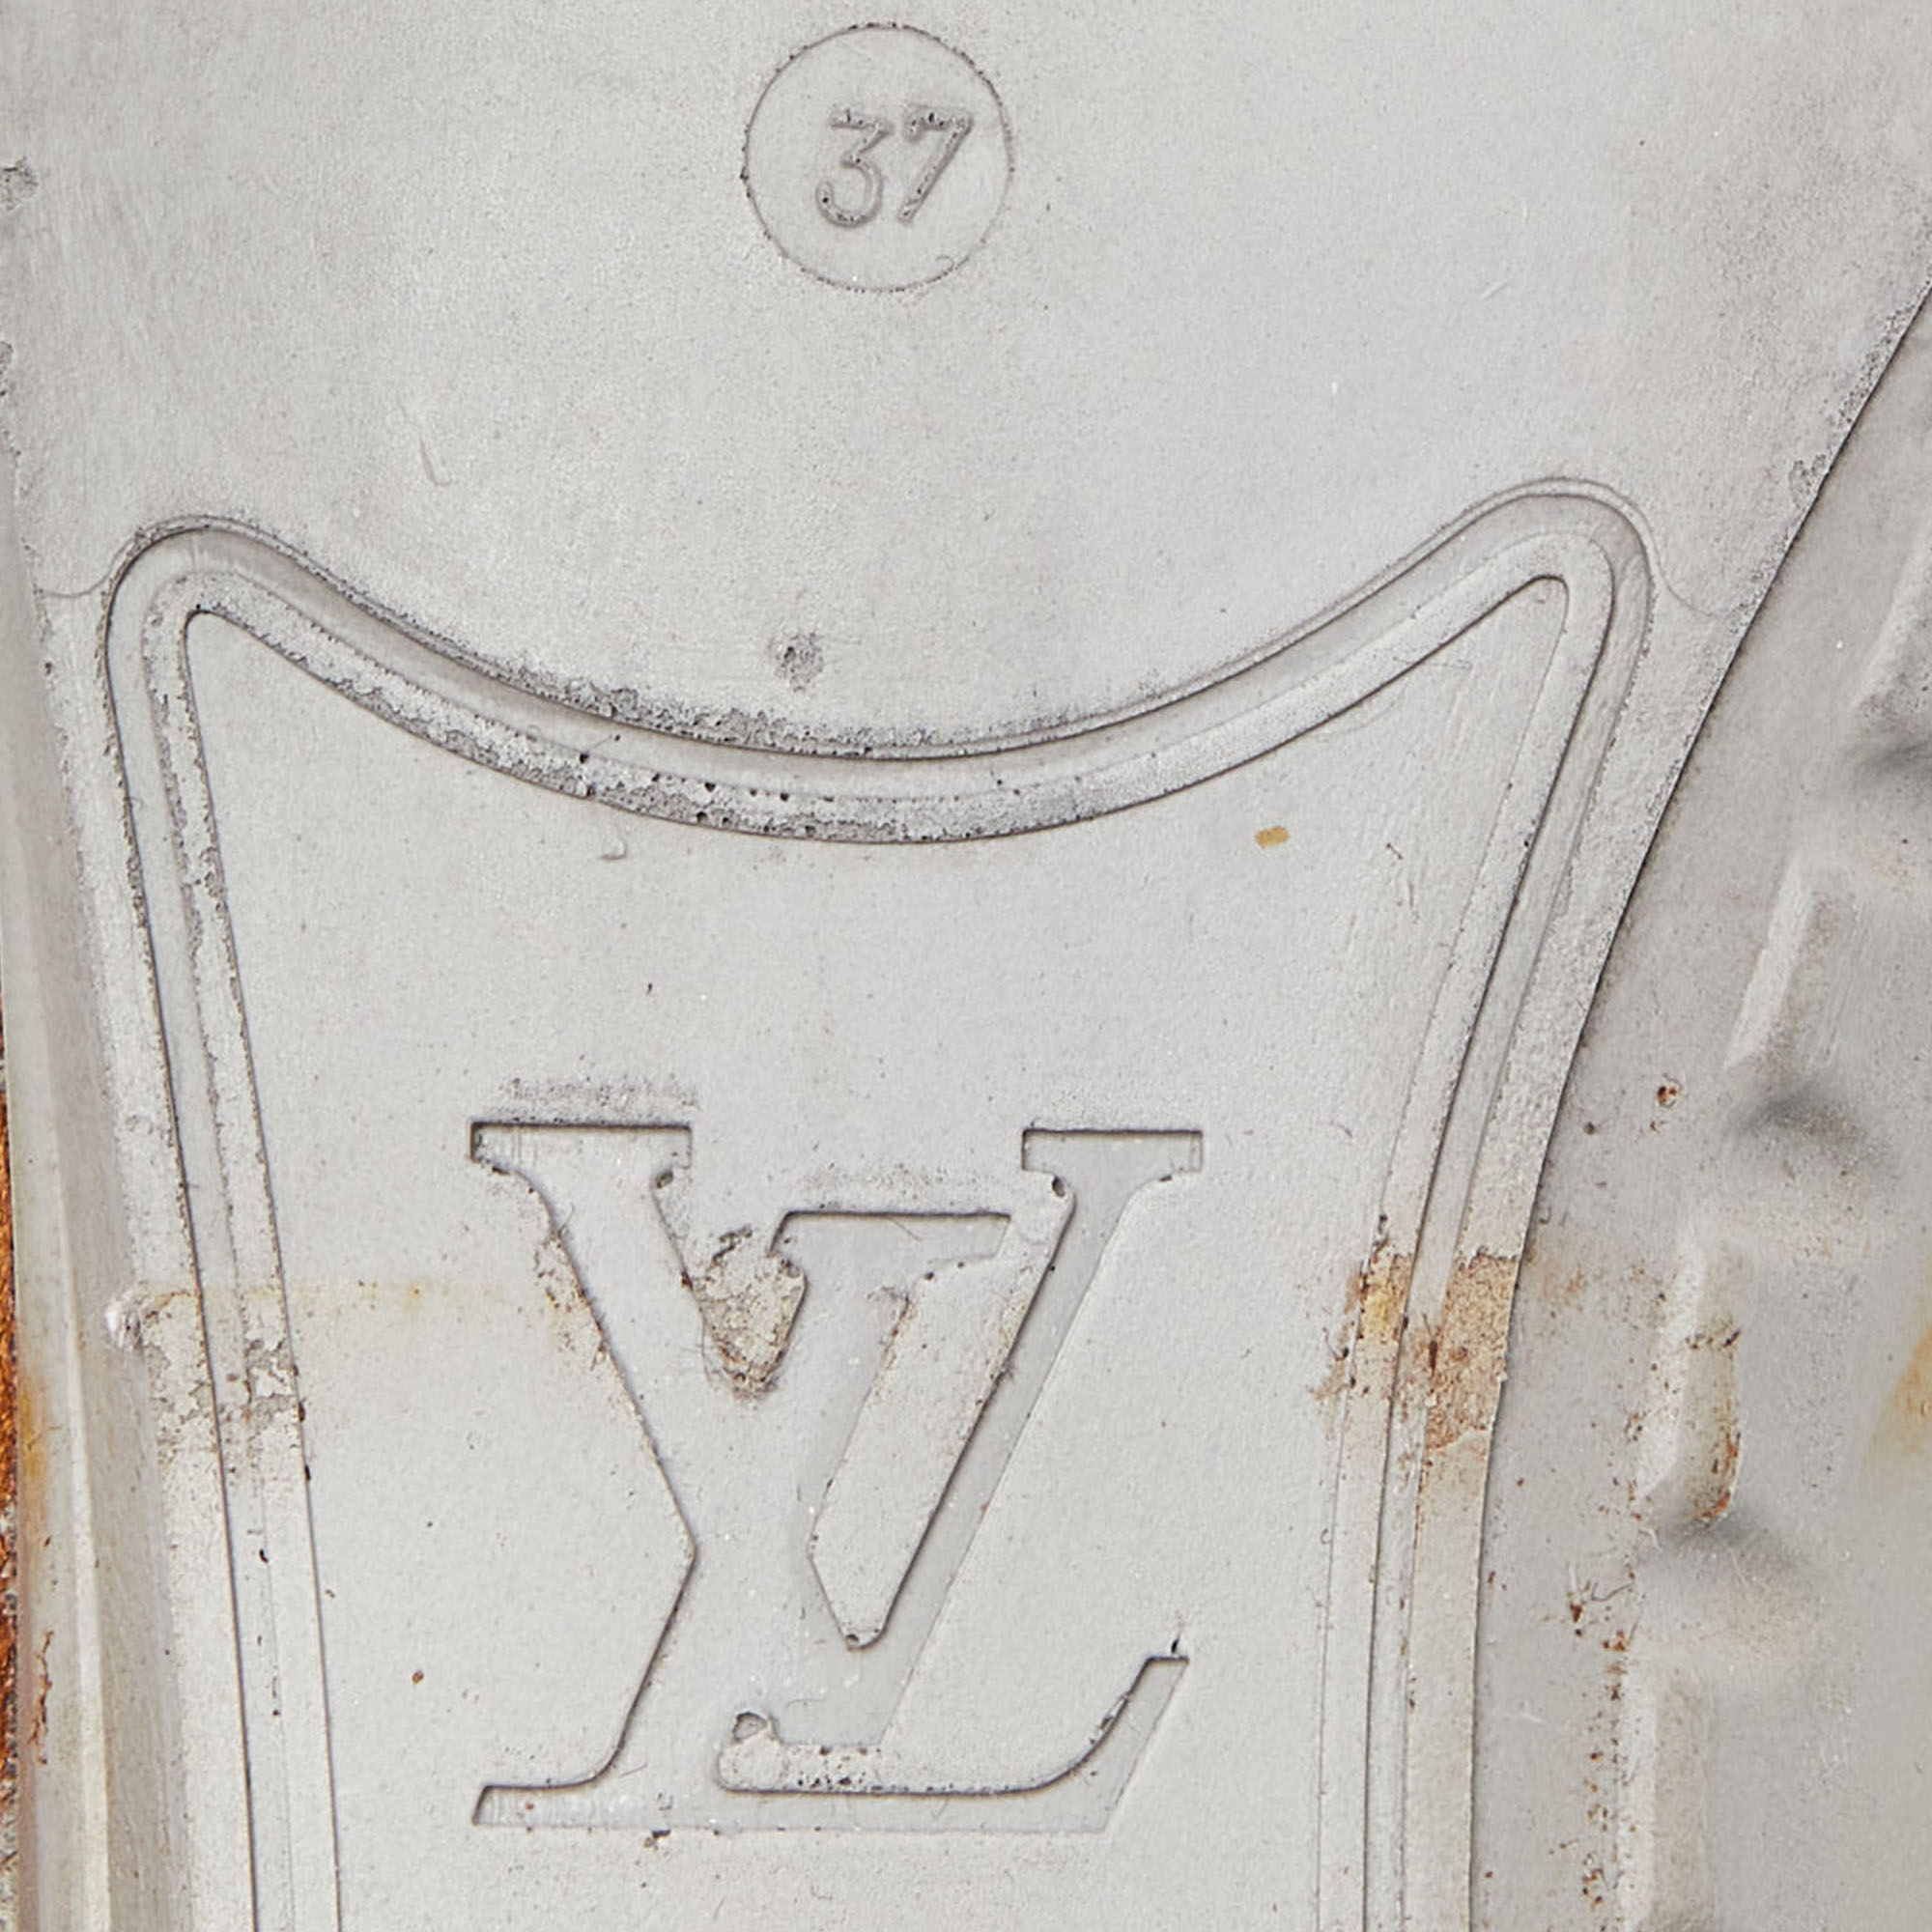 Louis Vuitton Green/Brown Monogram Canvas Destination Sneakers Size 37